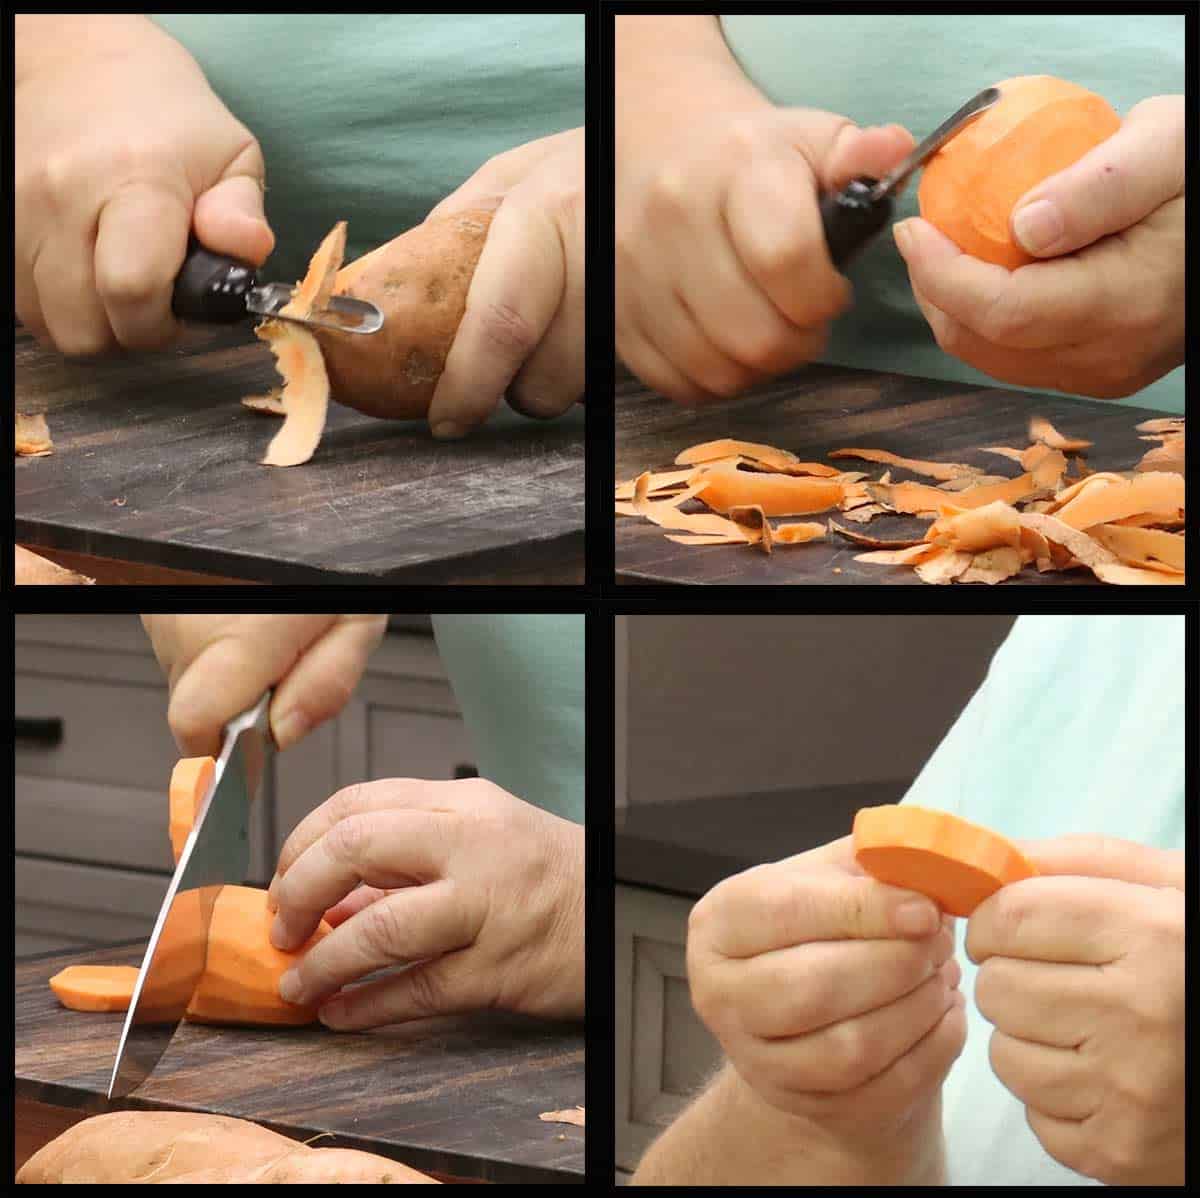 Peeling and slicing sweet potatoes.